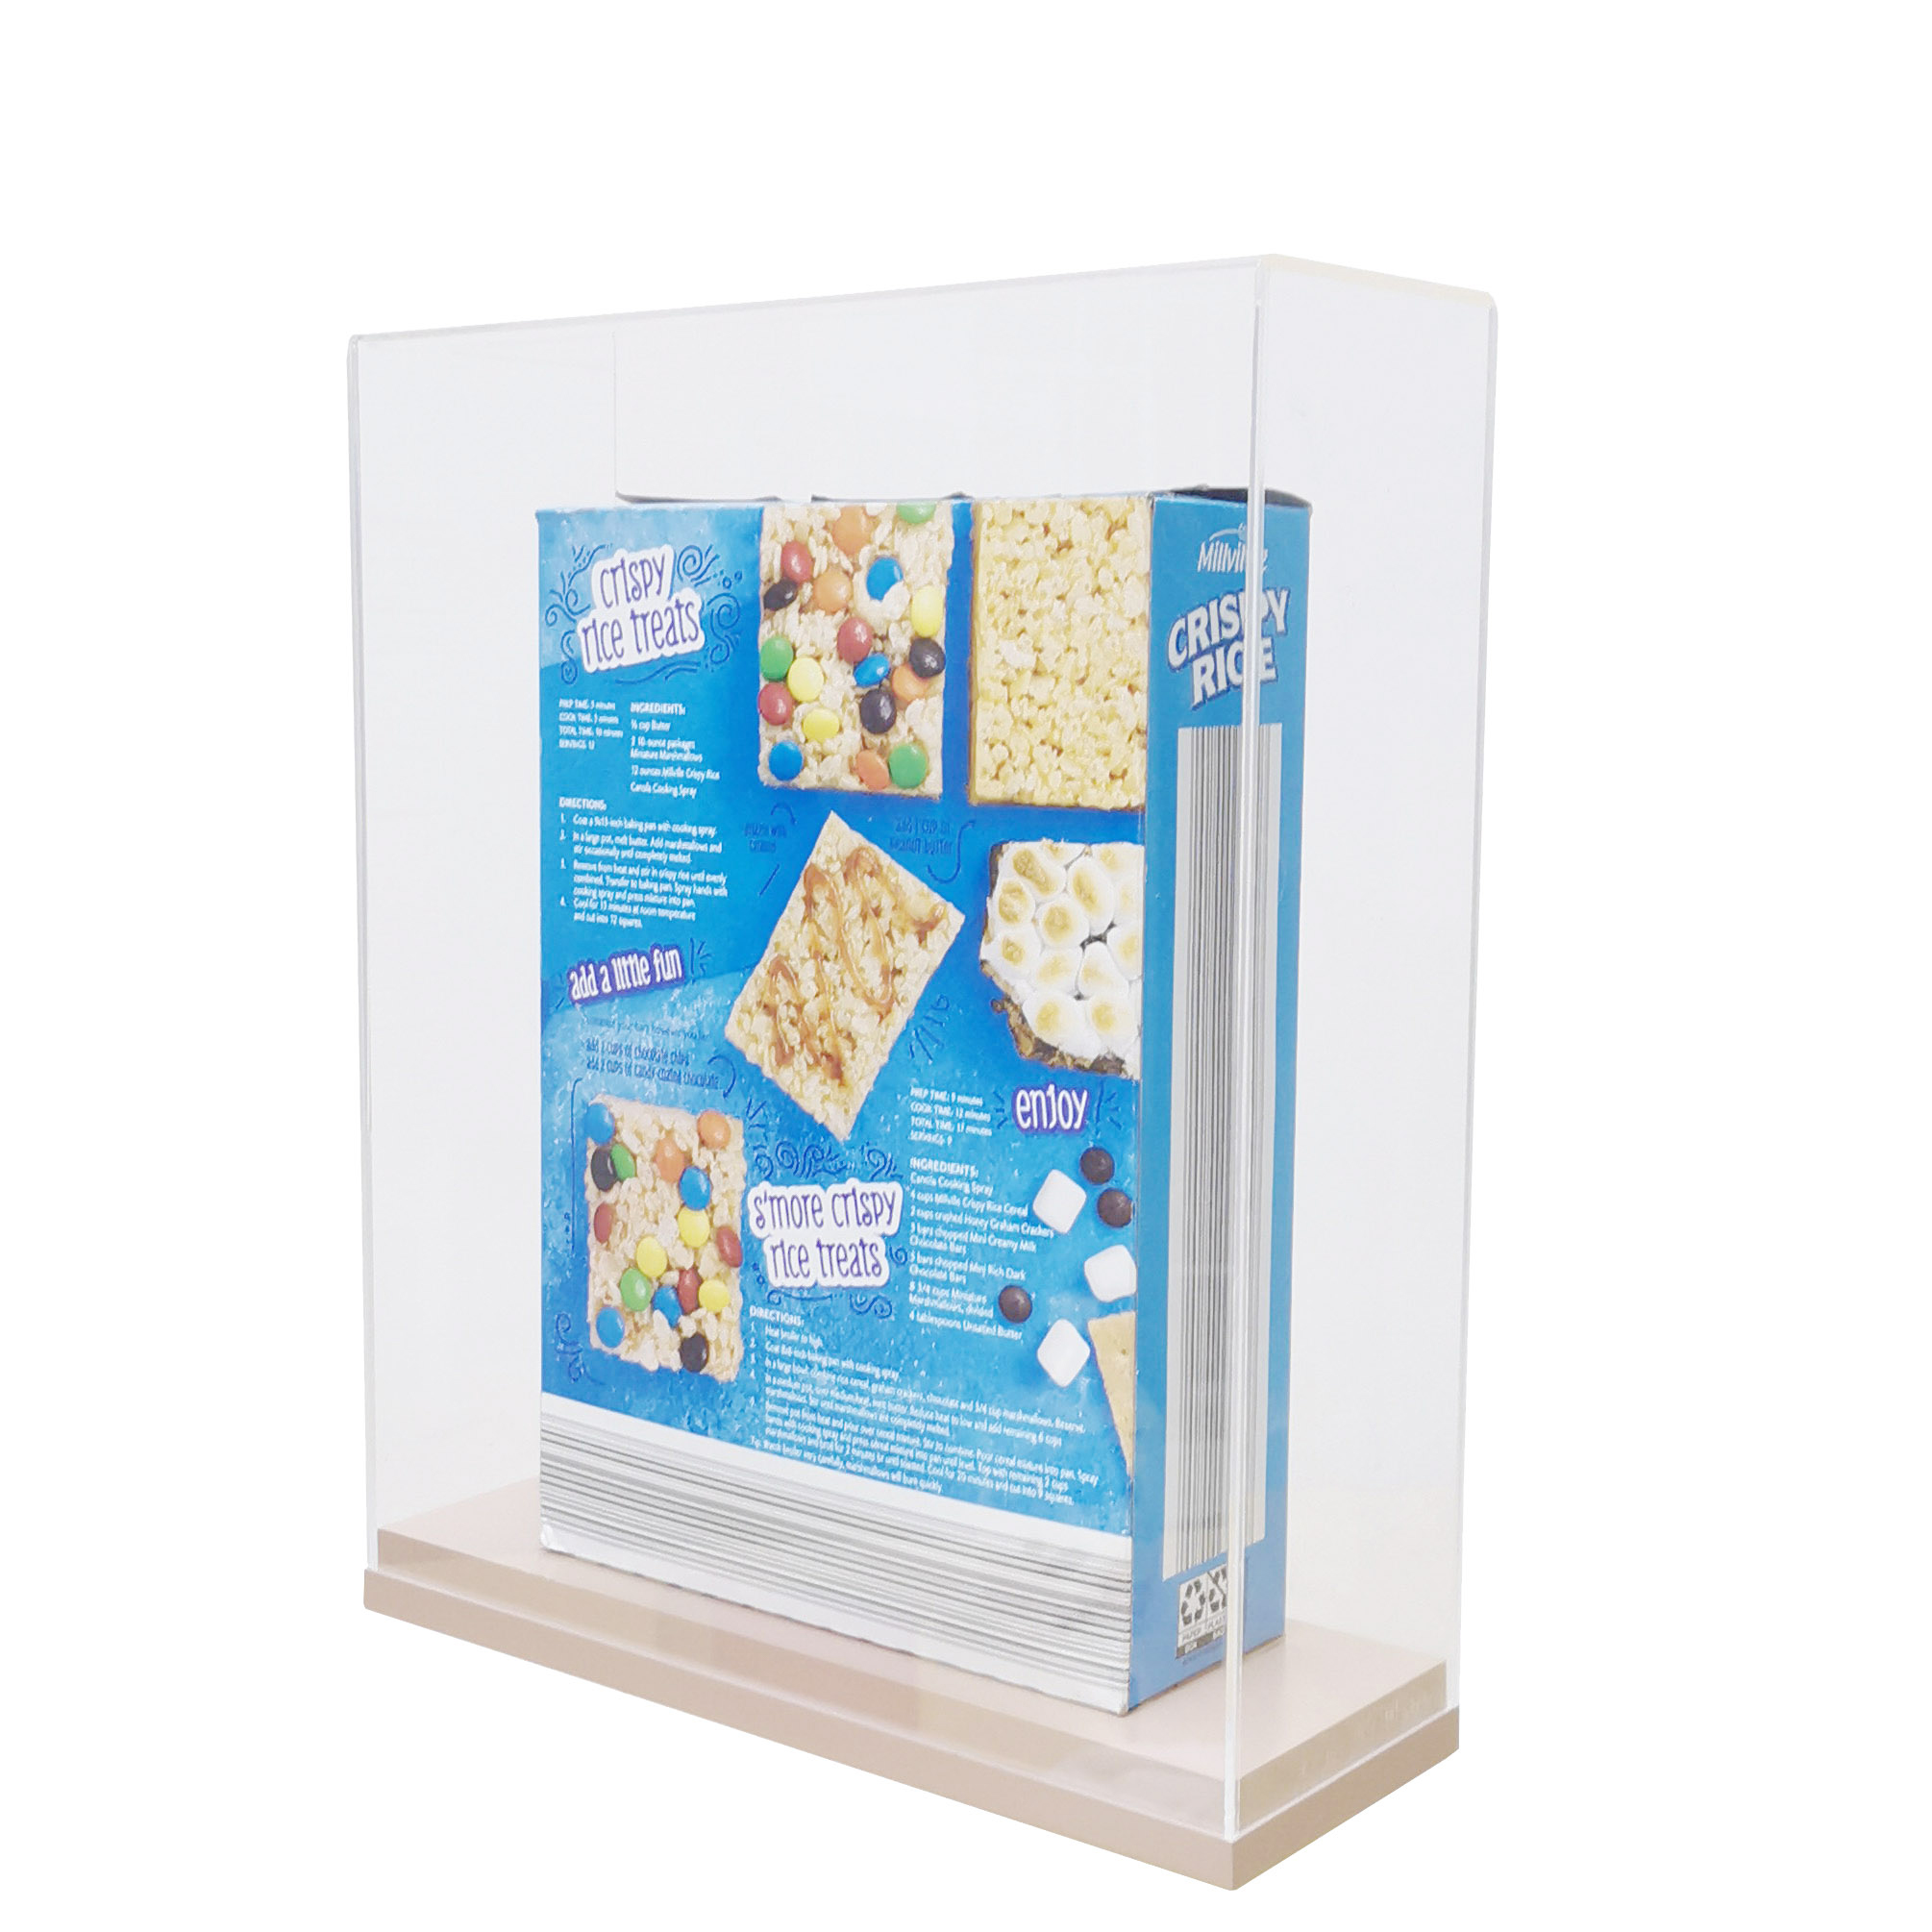 FixtureDisplays 10.8x4x12.9" Acrylic Family Size Cereal Box Display Trophy Figurine Glorifier Book Showcase Candy Dispenser 100055